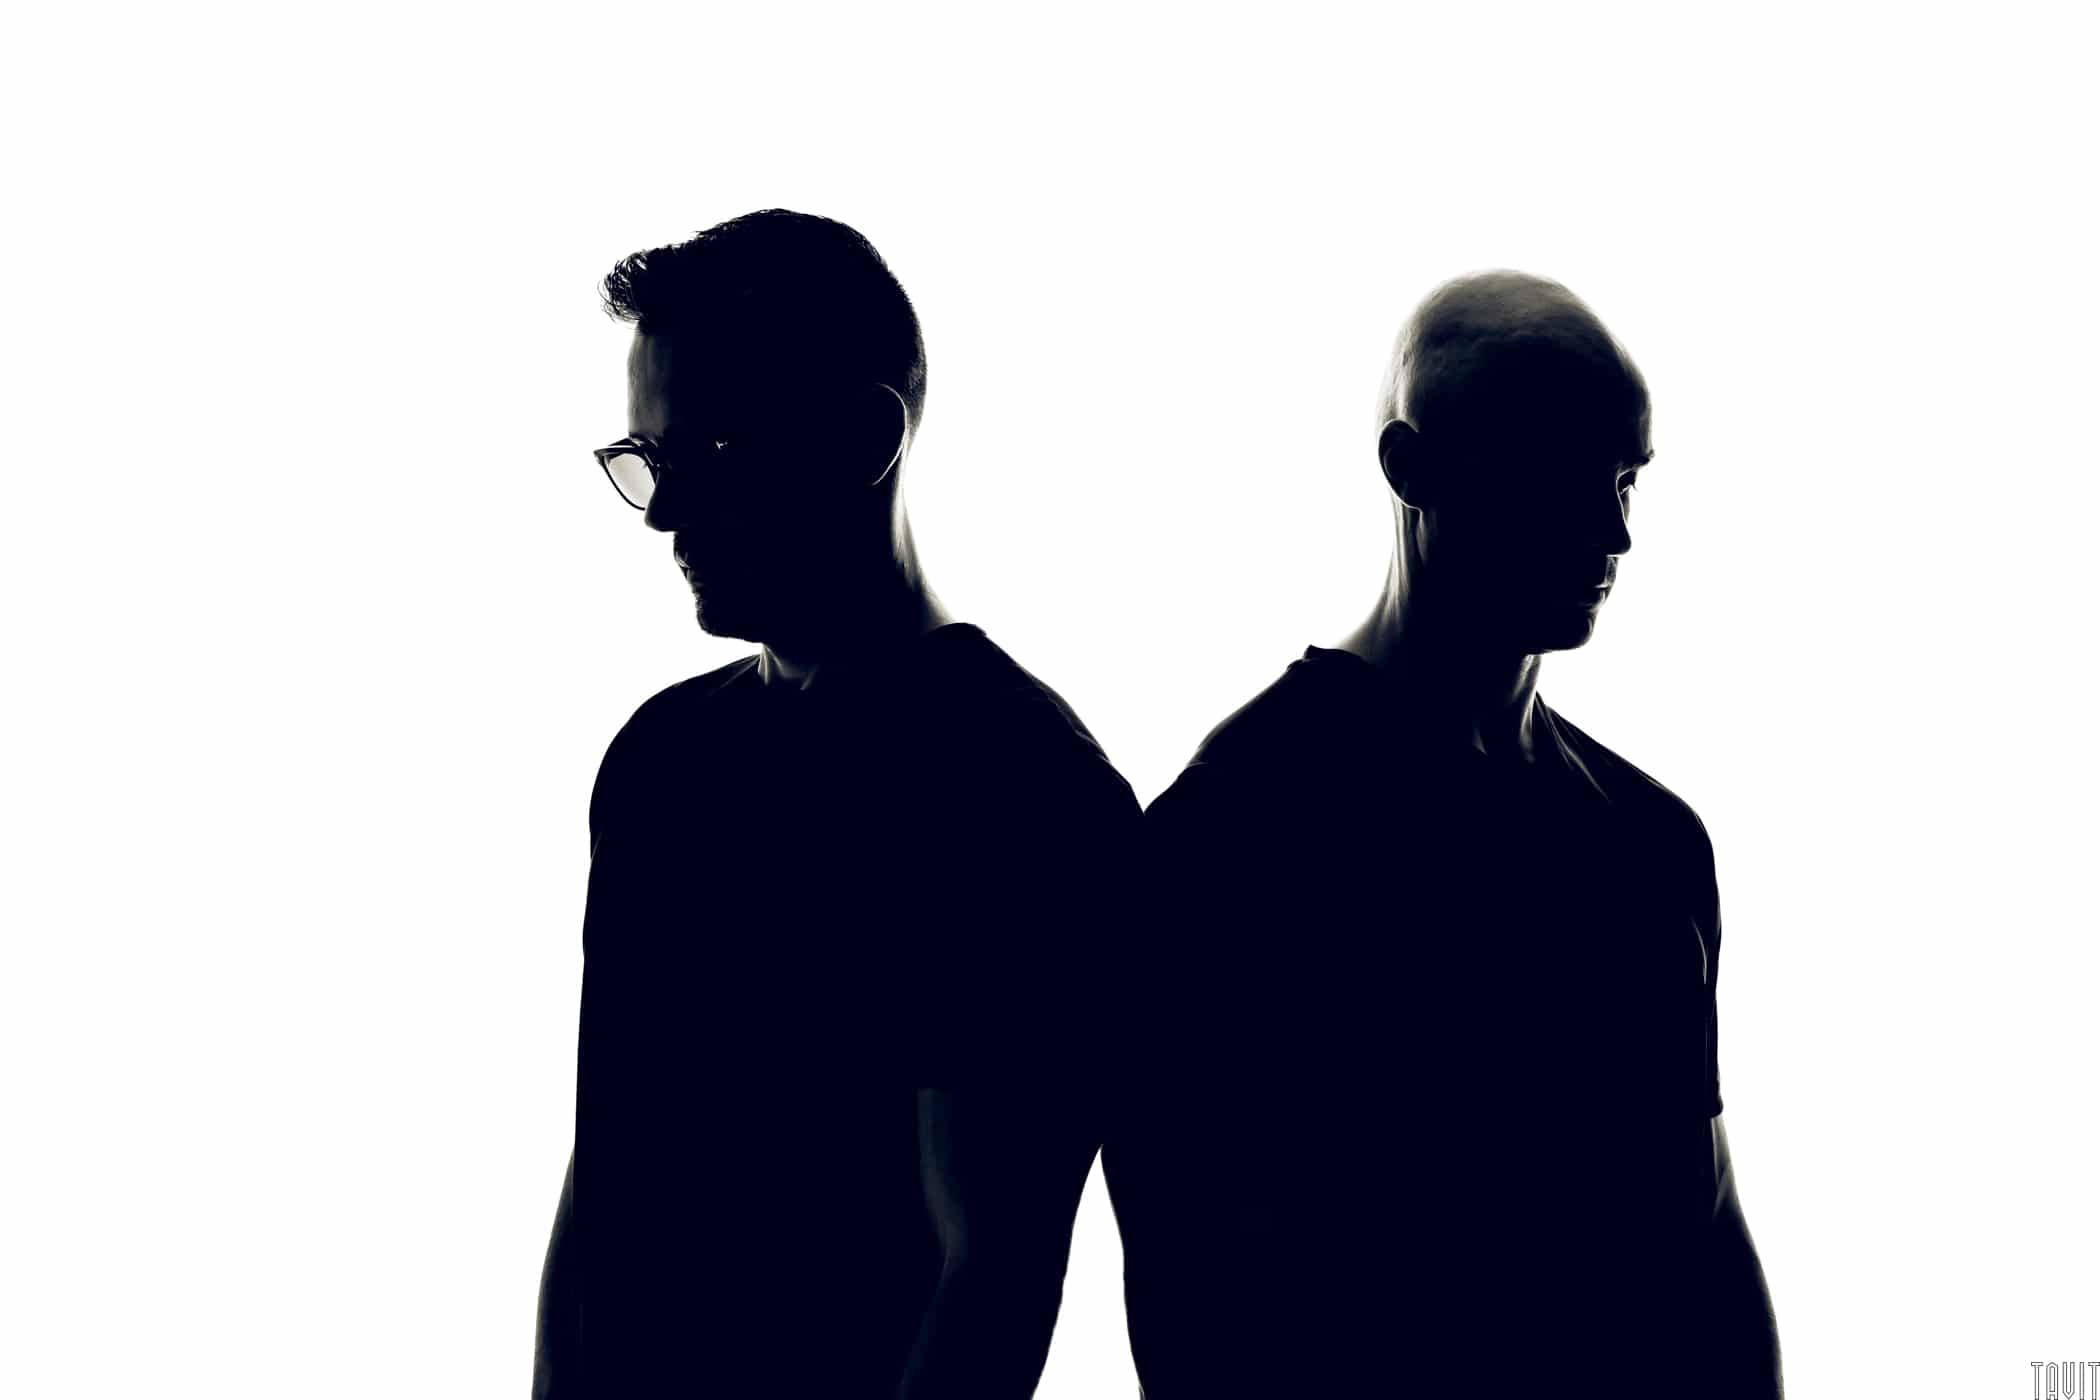 Two men looking down silhouette headshot